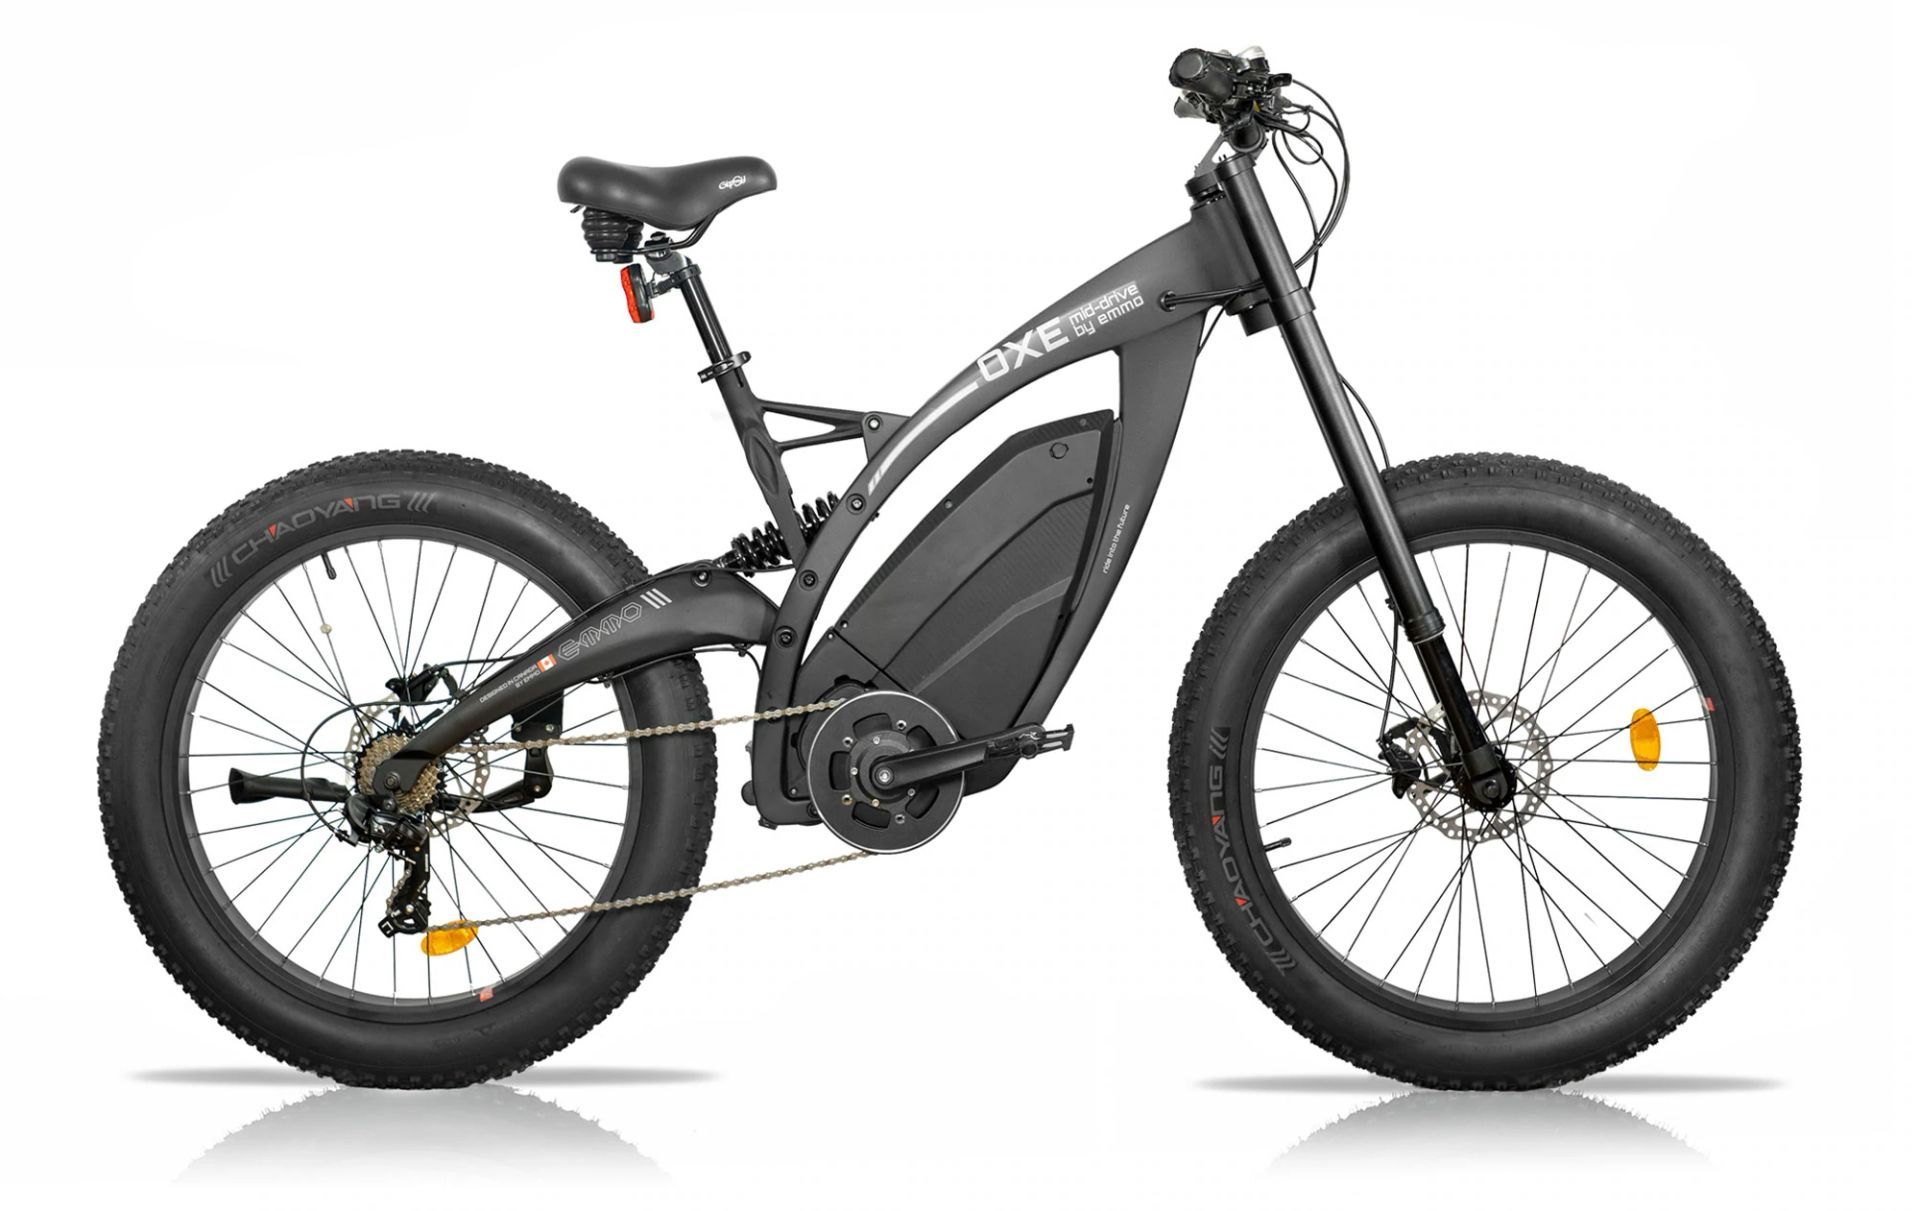 Emmo OXE - Mid electric mountain bike